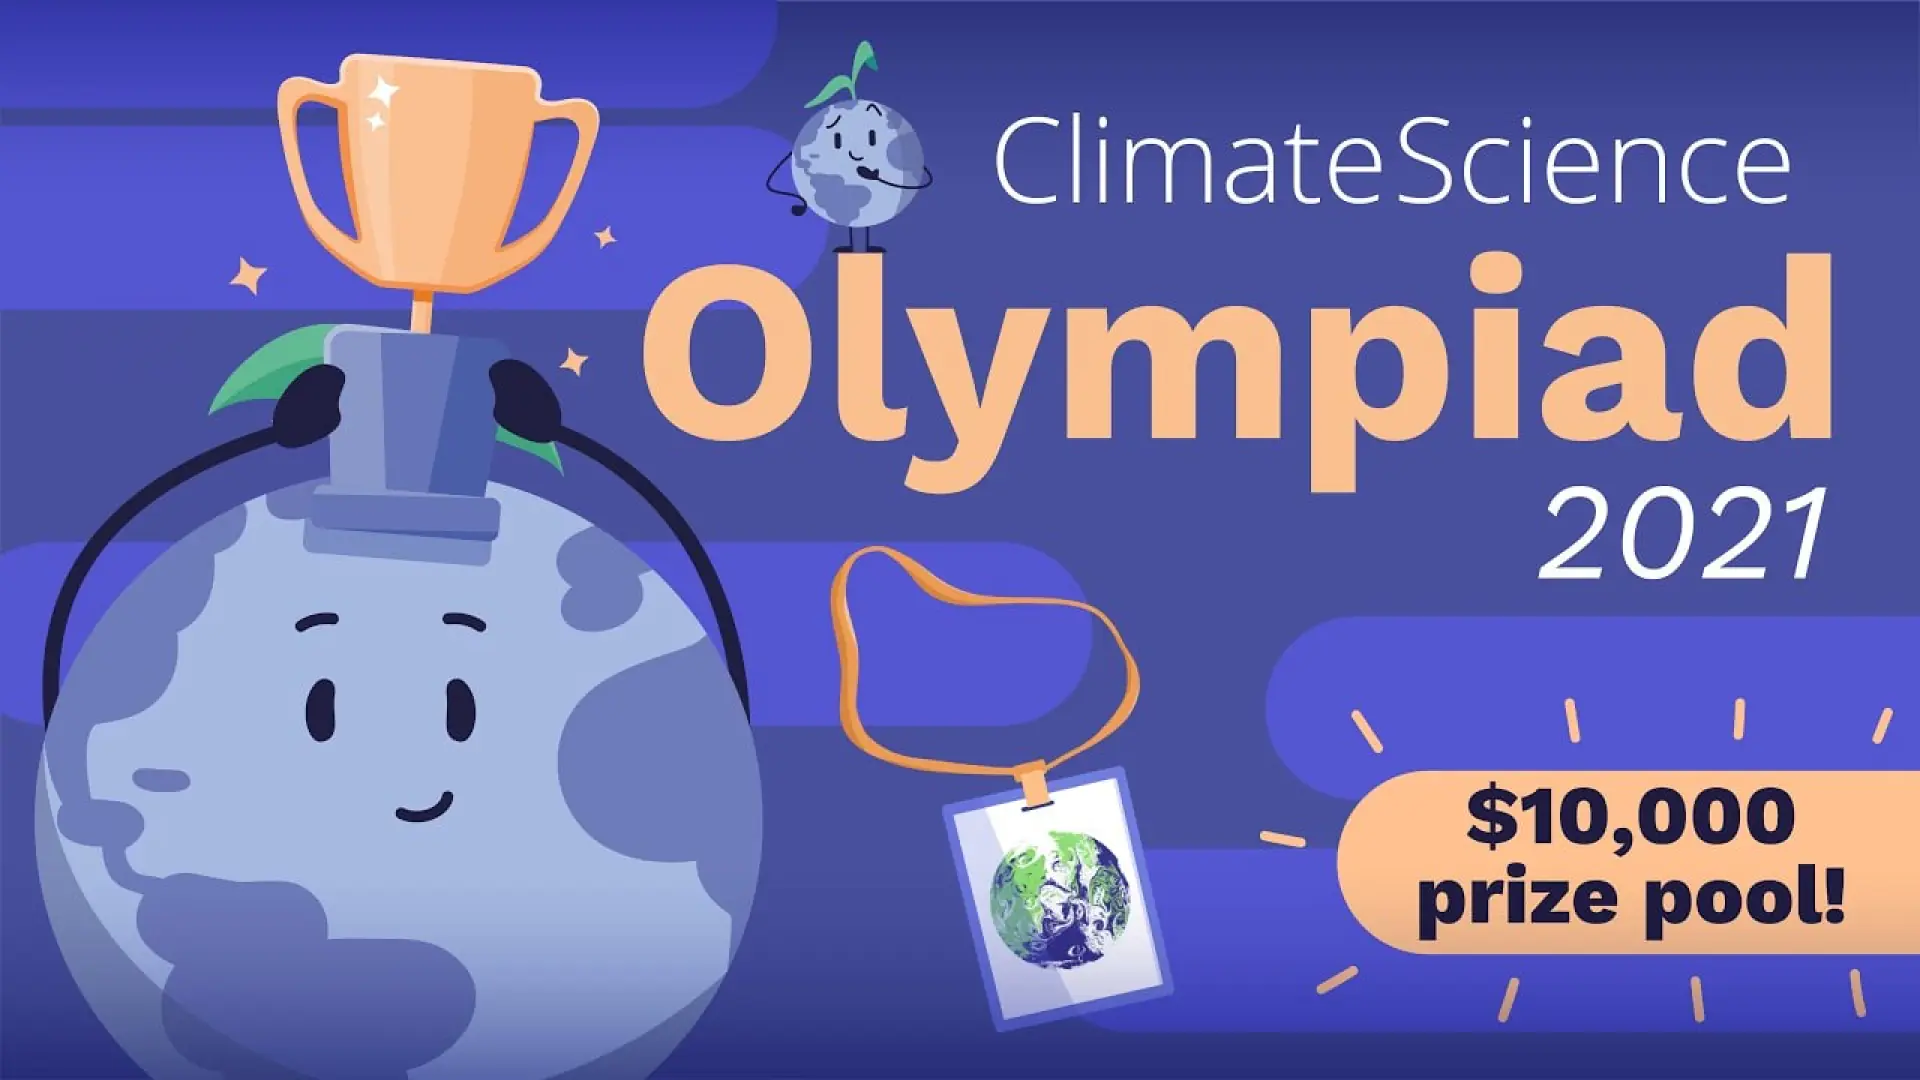 Umumiy sovrin jamgʻarmasi $10,000 dollarlik “Climate Science 2021” Olimpiadasi